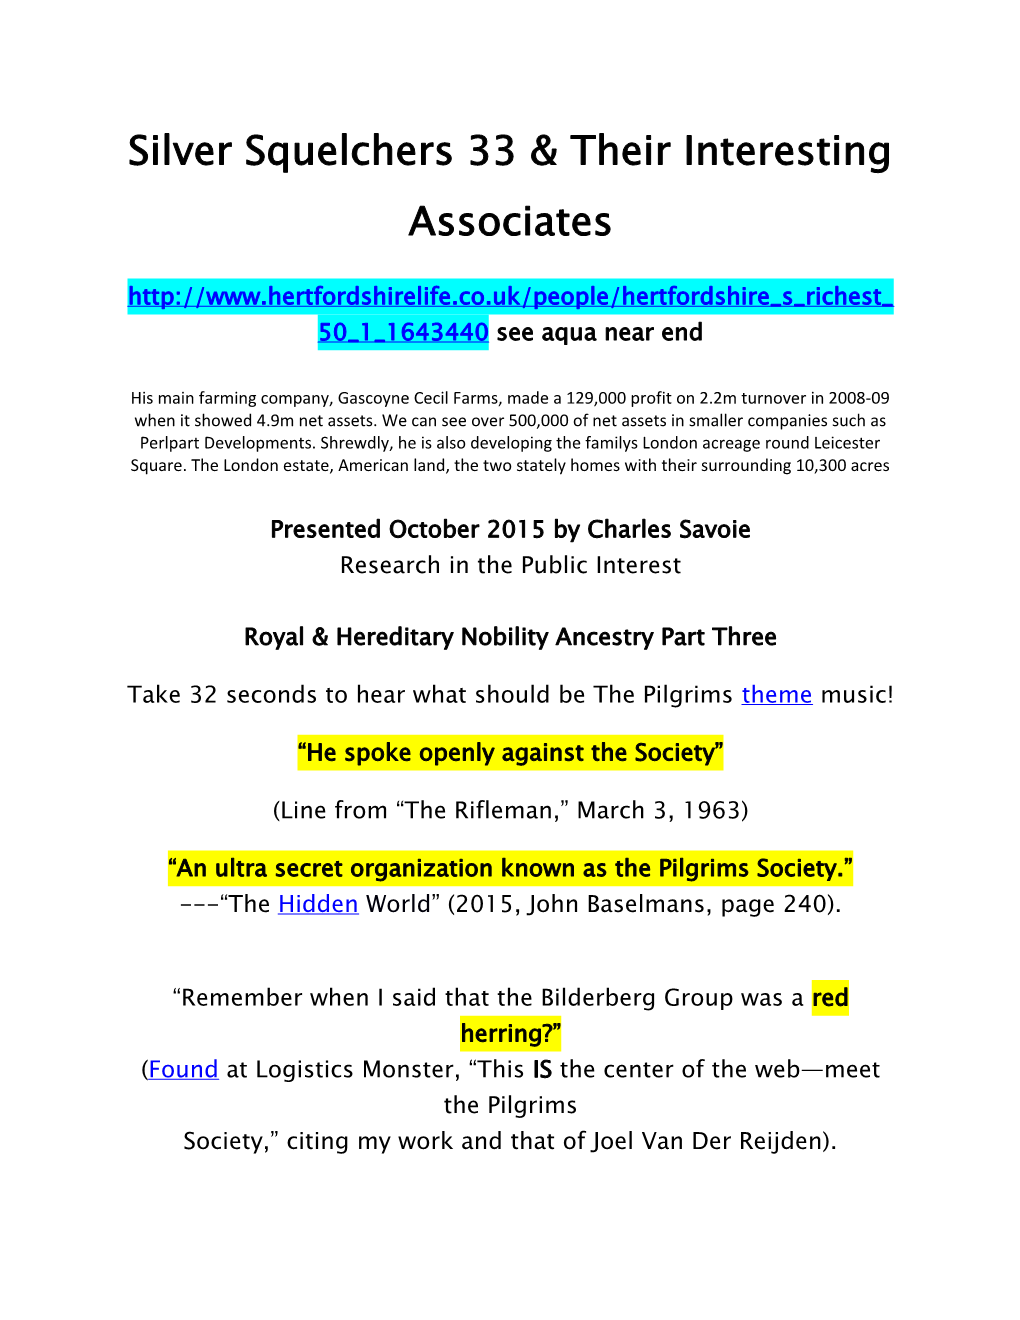 Silver Squelchers 33 & Their Interesting Associates